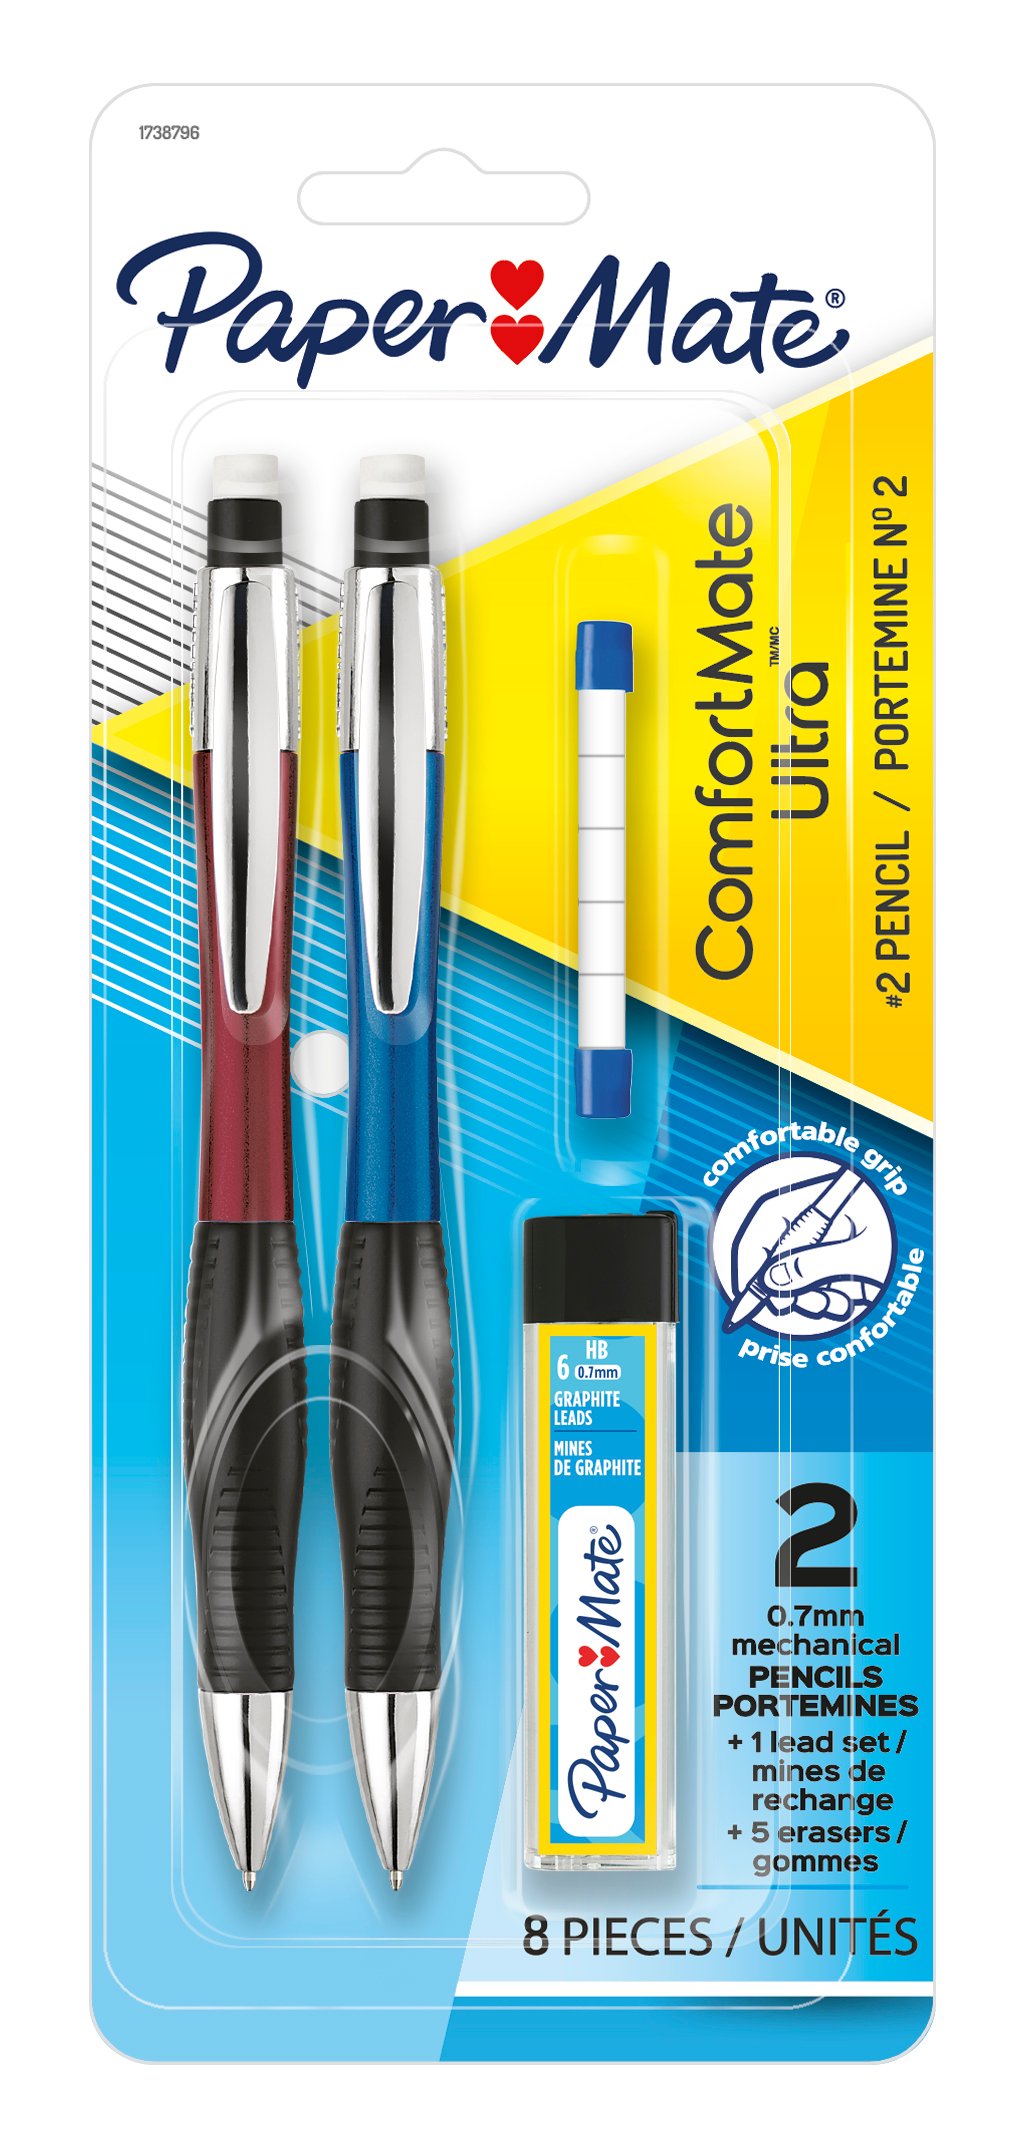 5 Paper Mate ComfortMate Ultra Mechanical Pencil Set Red & Blue 0.7Mm Hb #2 